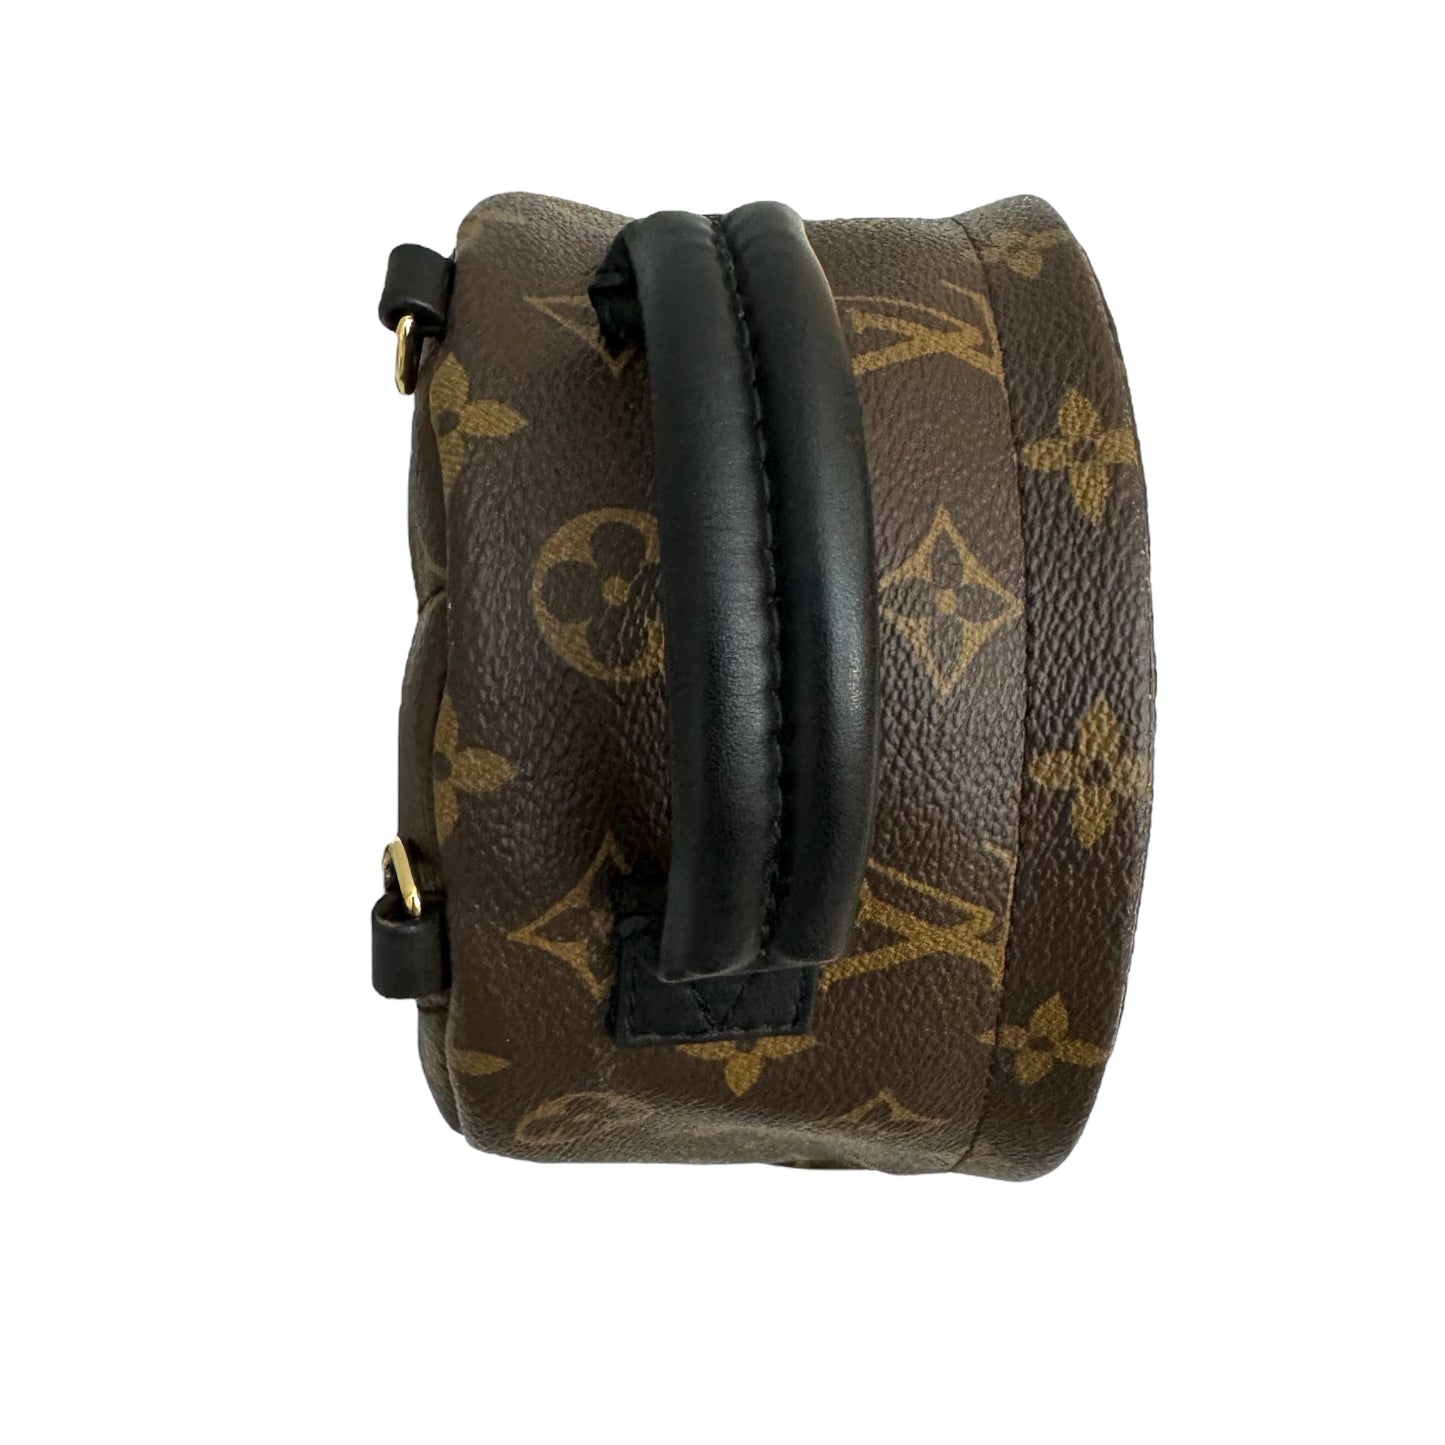 Louis Vuitton Palm Springs Mini Backpack